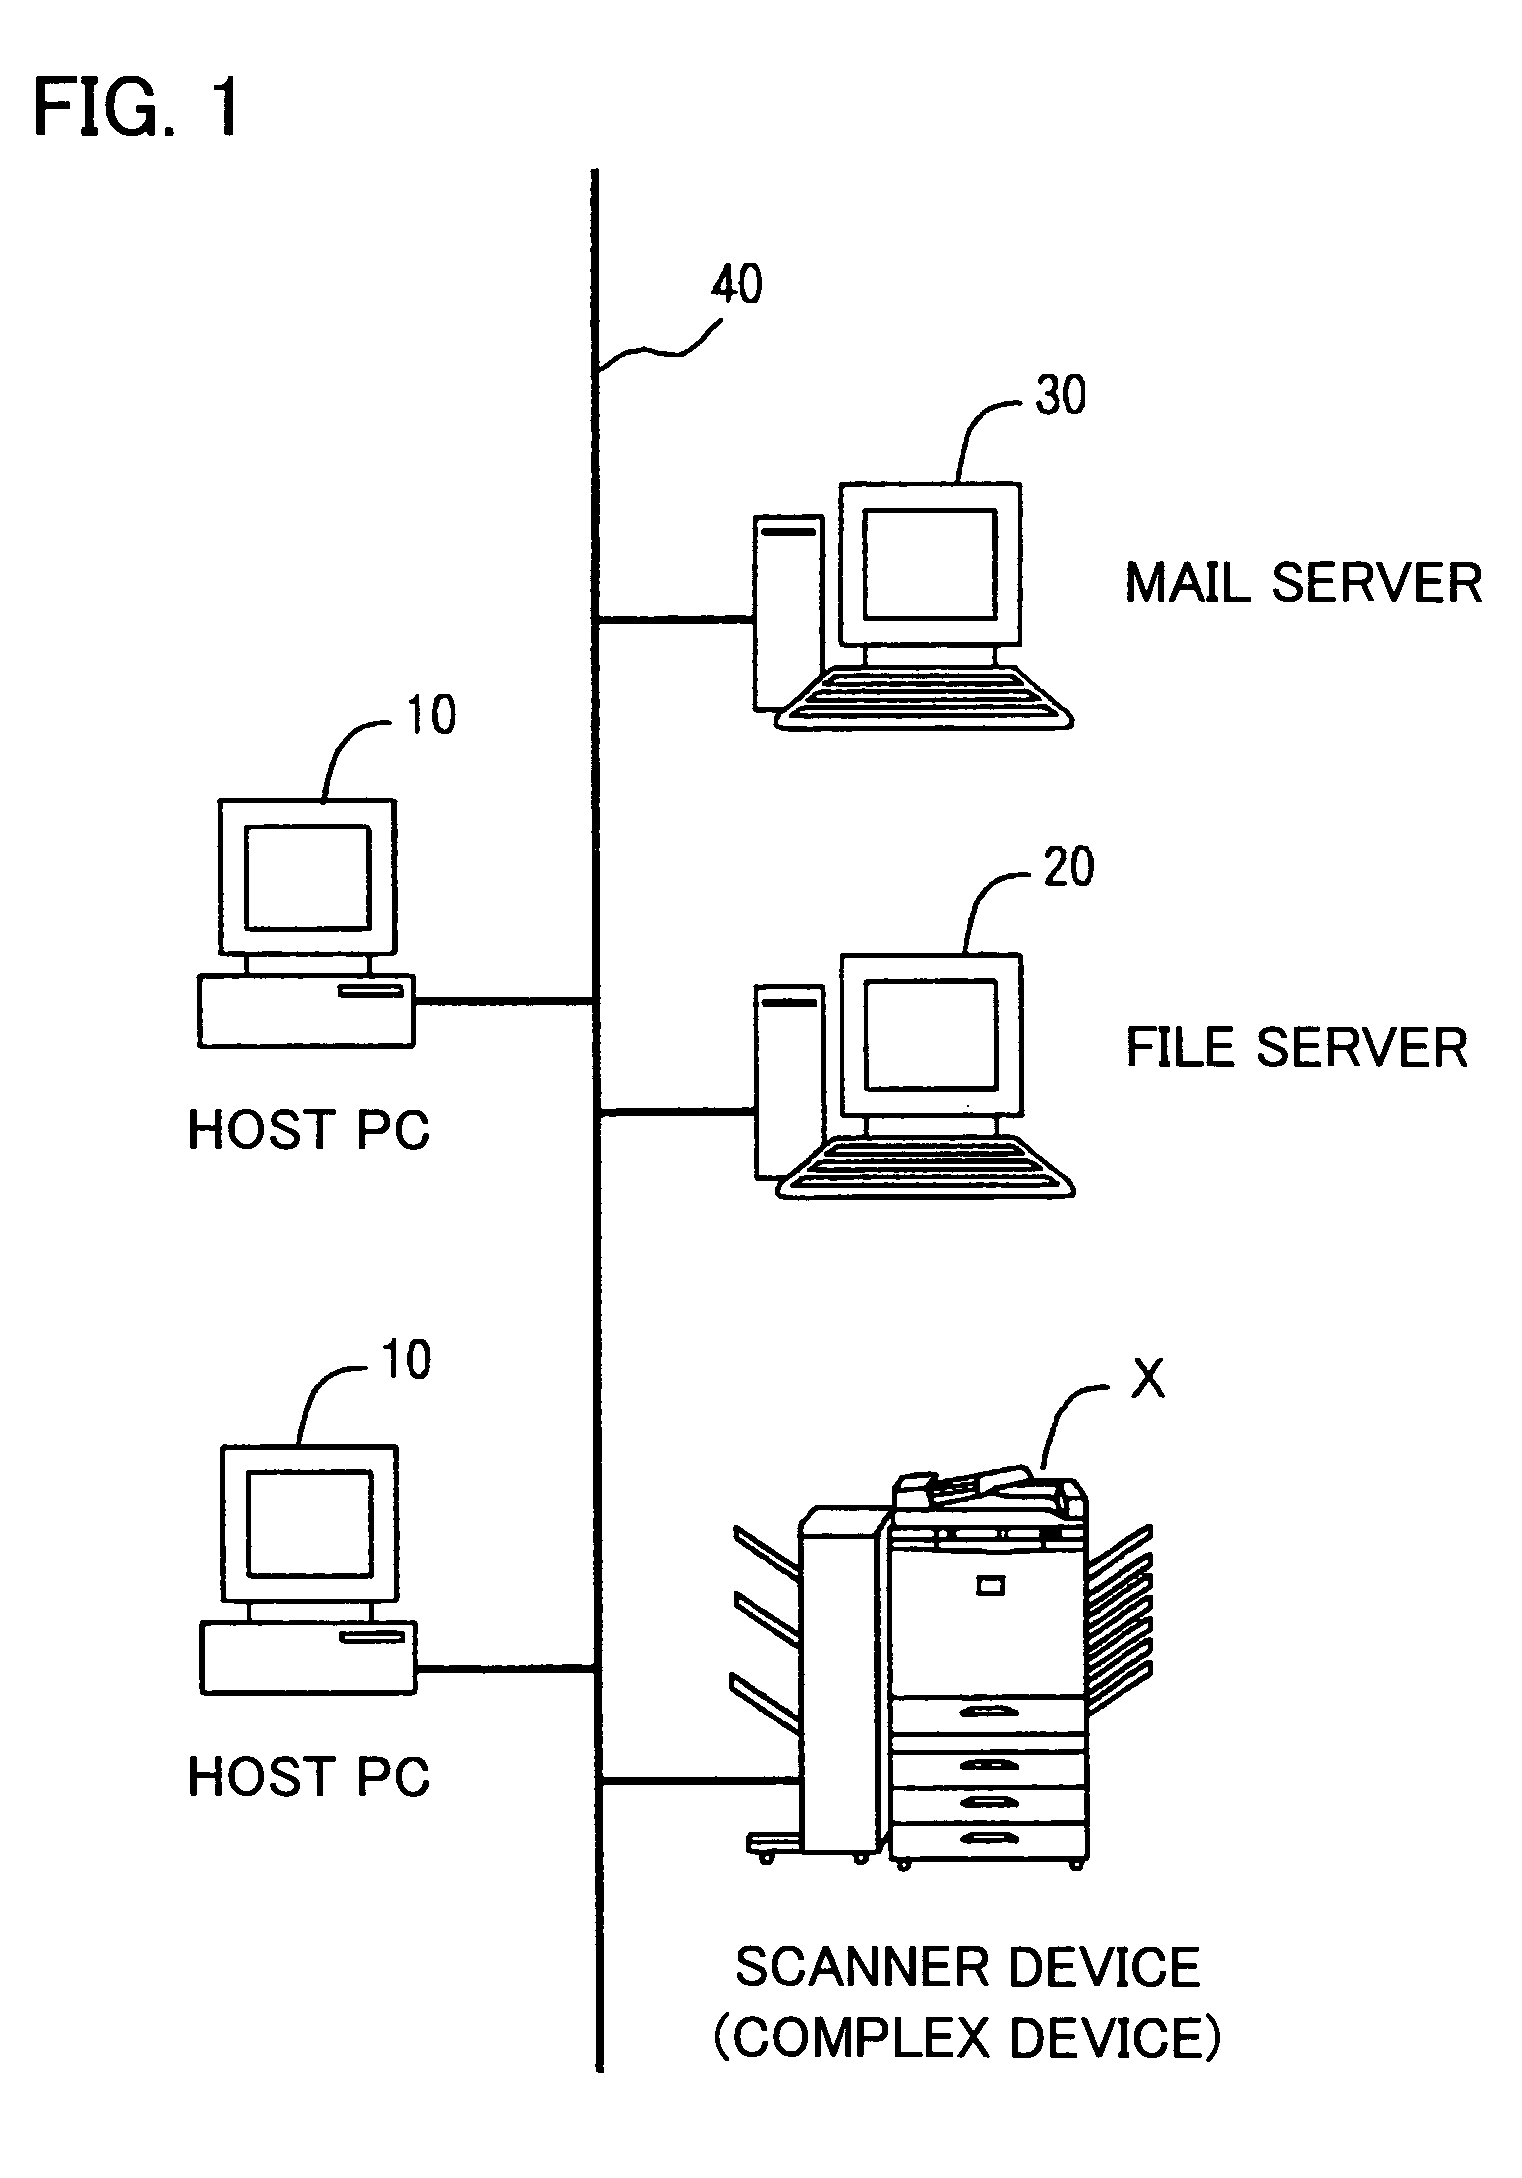 Network scanner